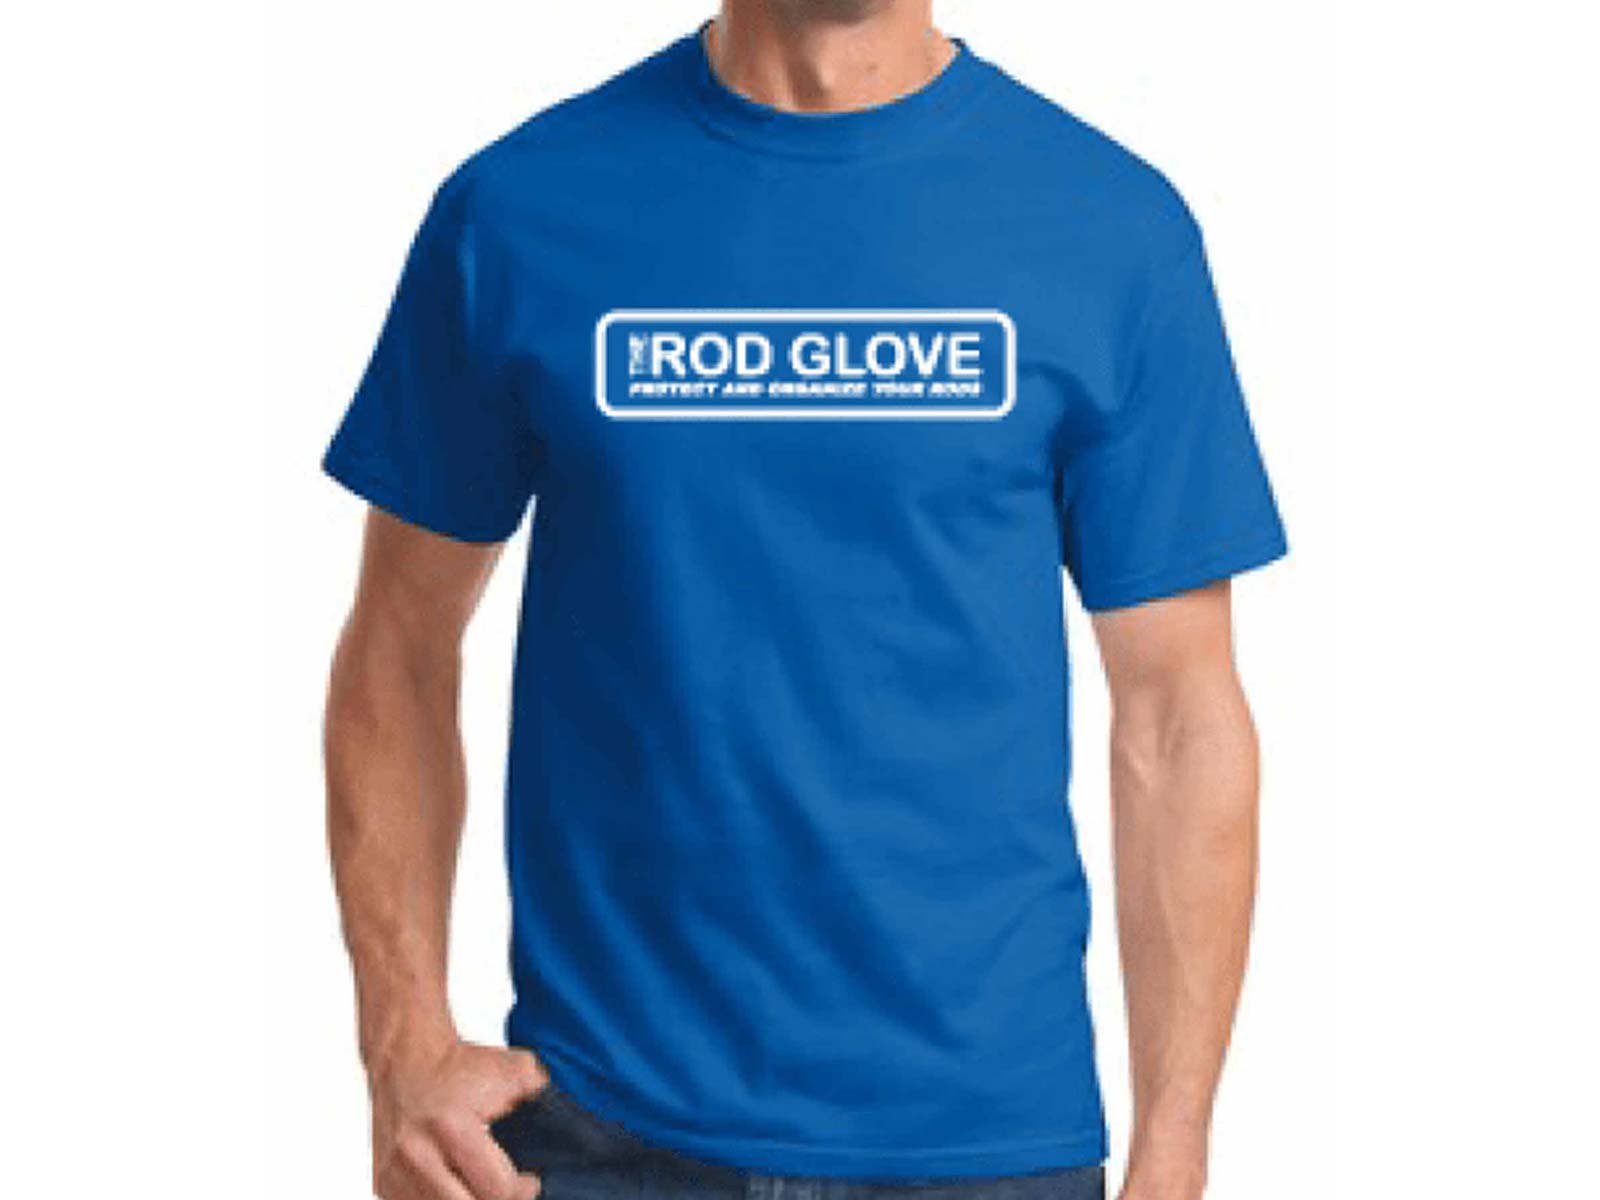 The Rod Glove Saver